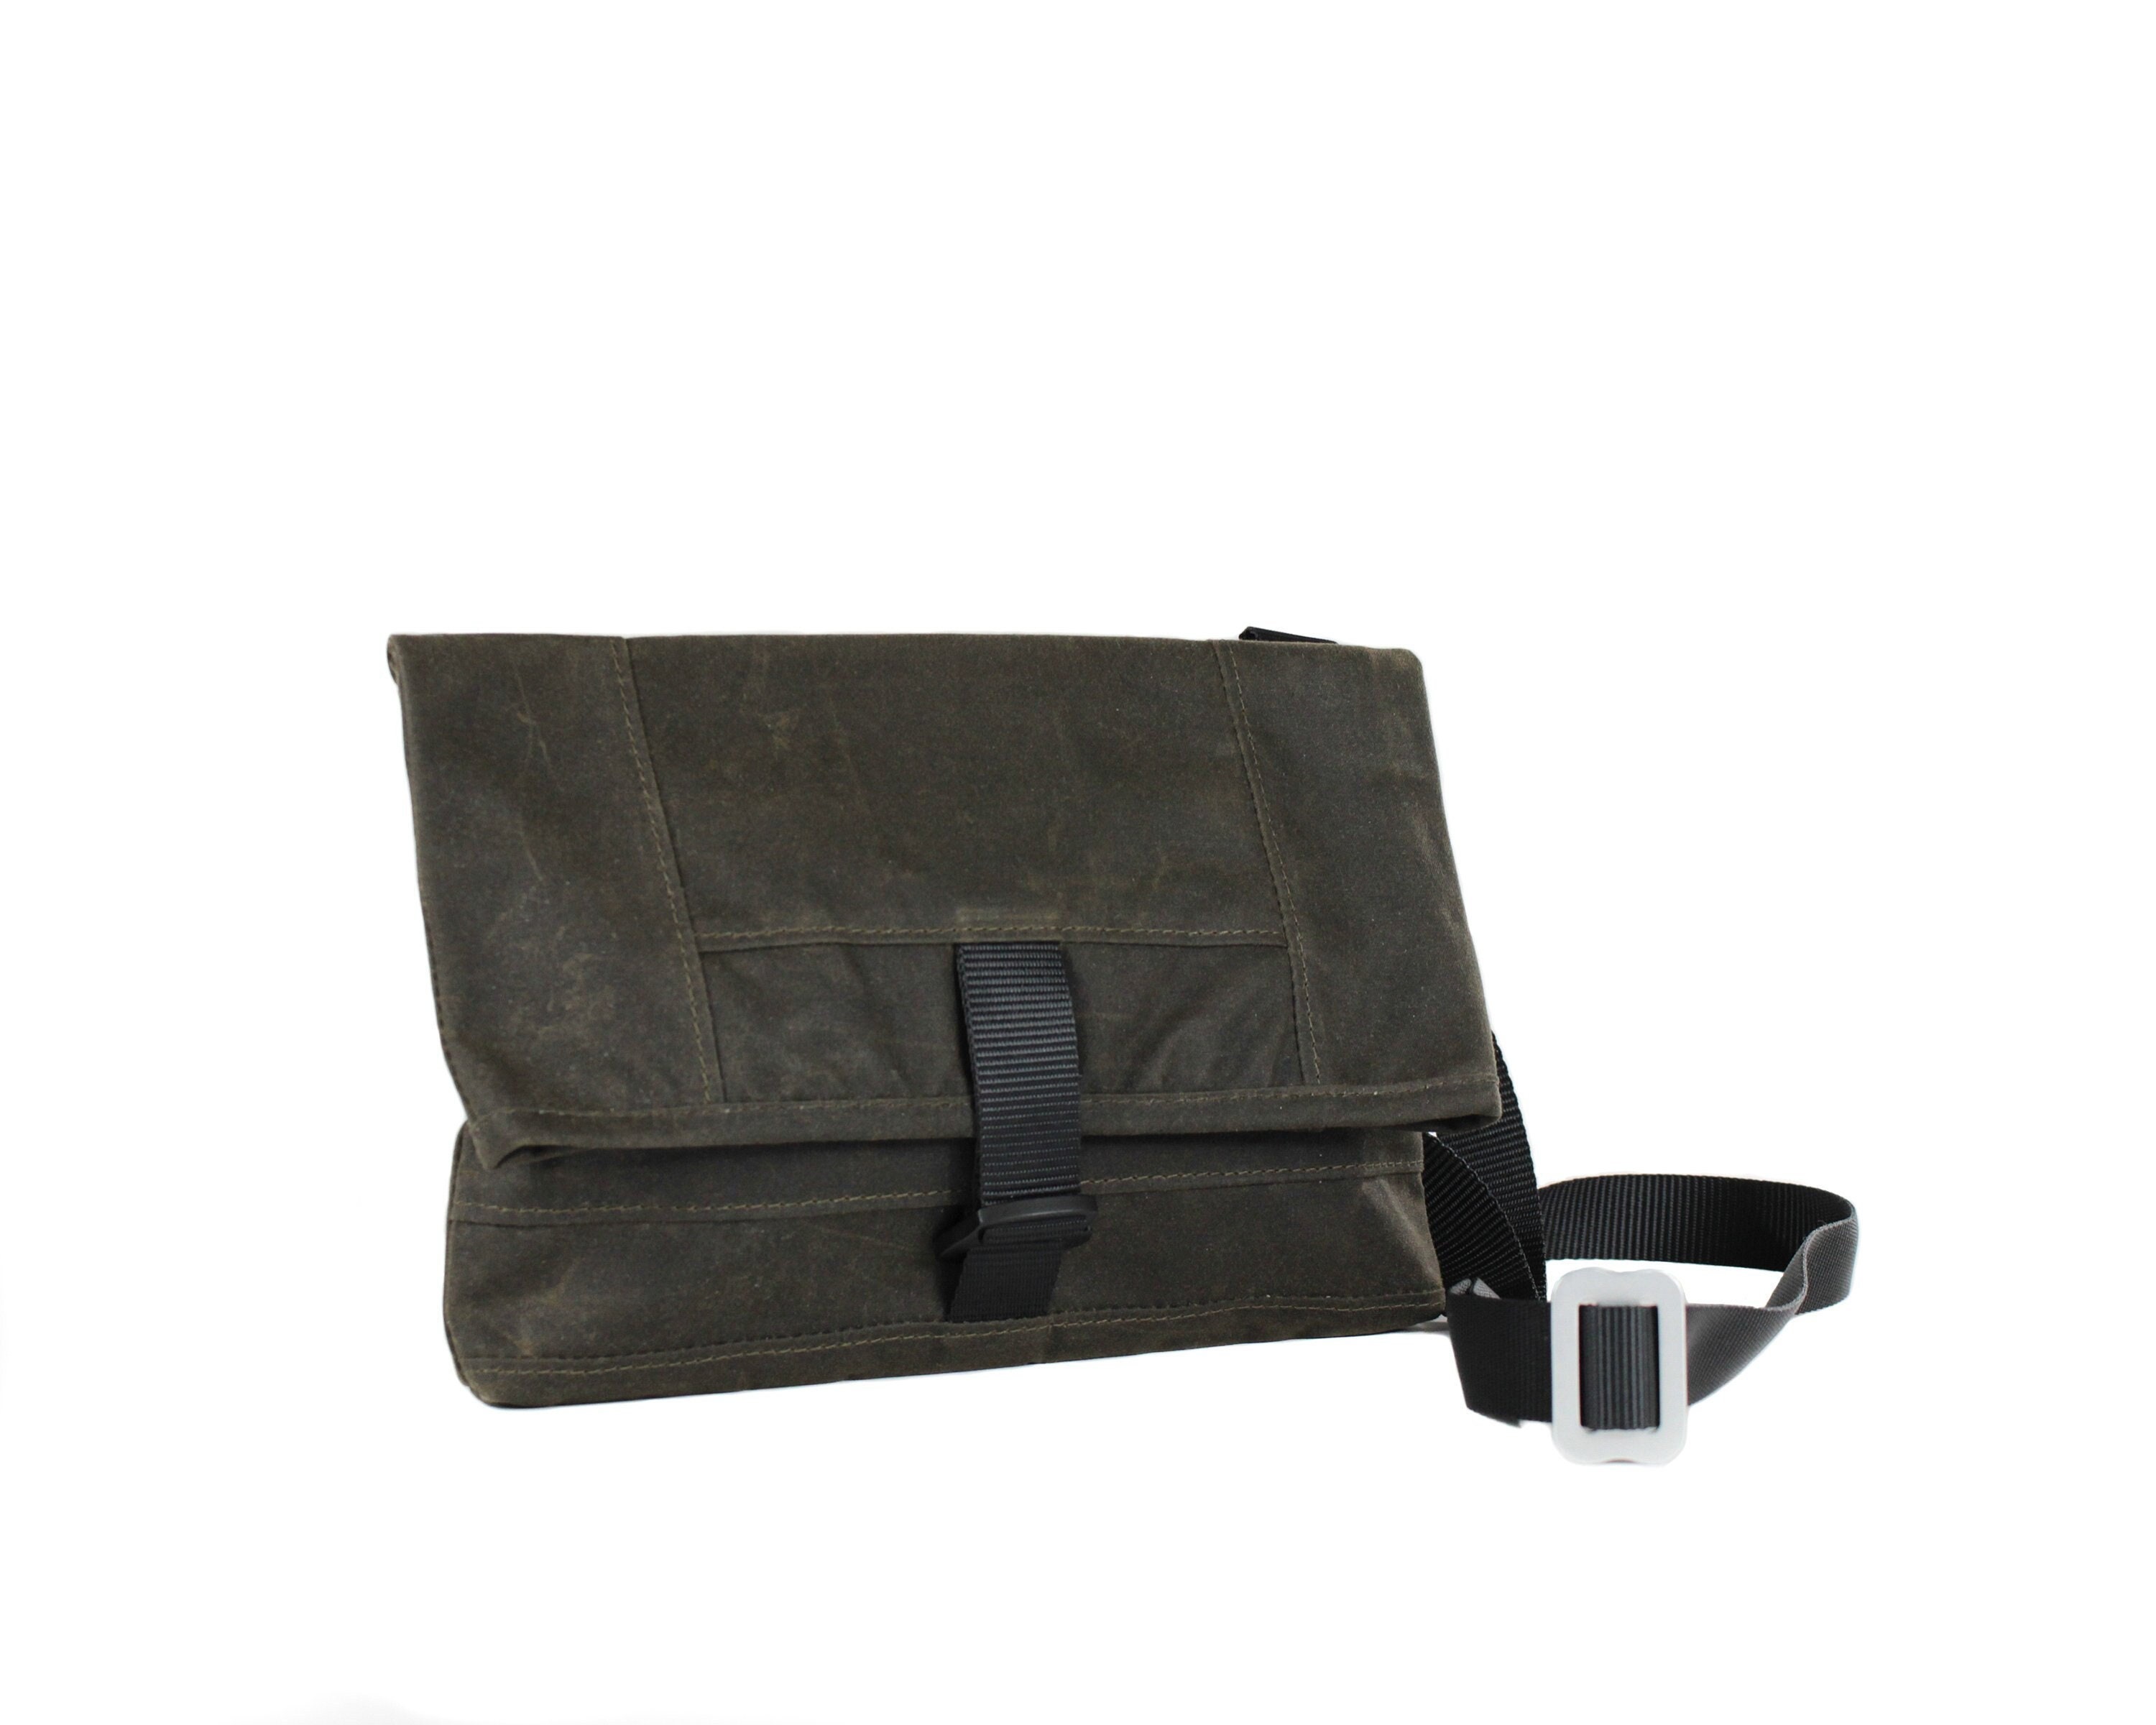 Foldover Bag - Canvas Crossbody Bag